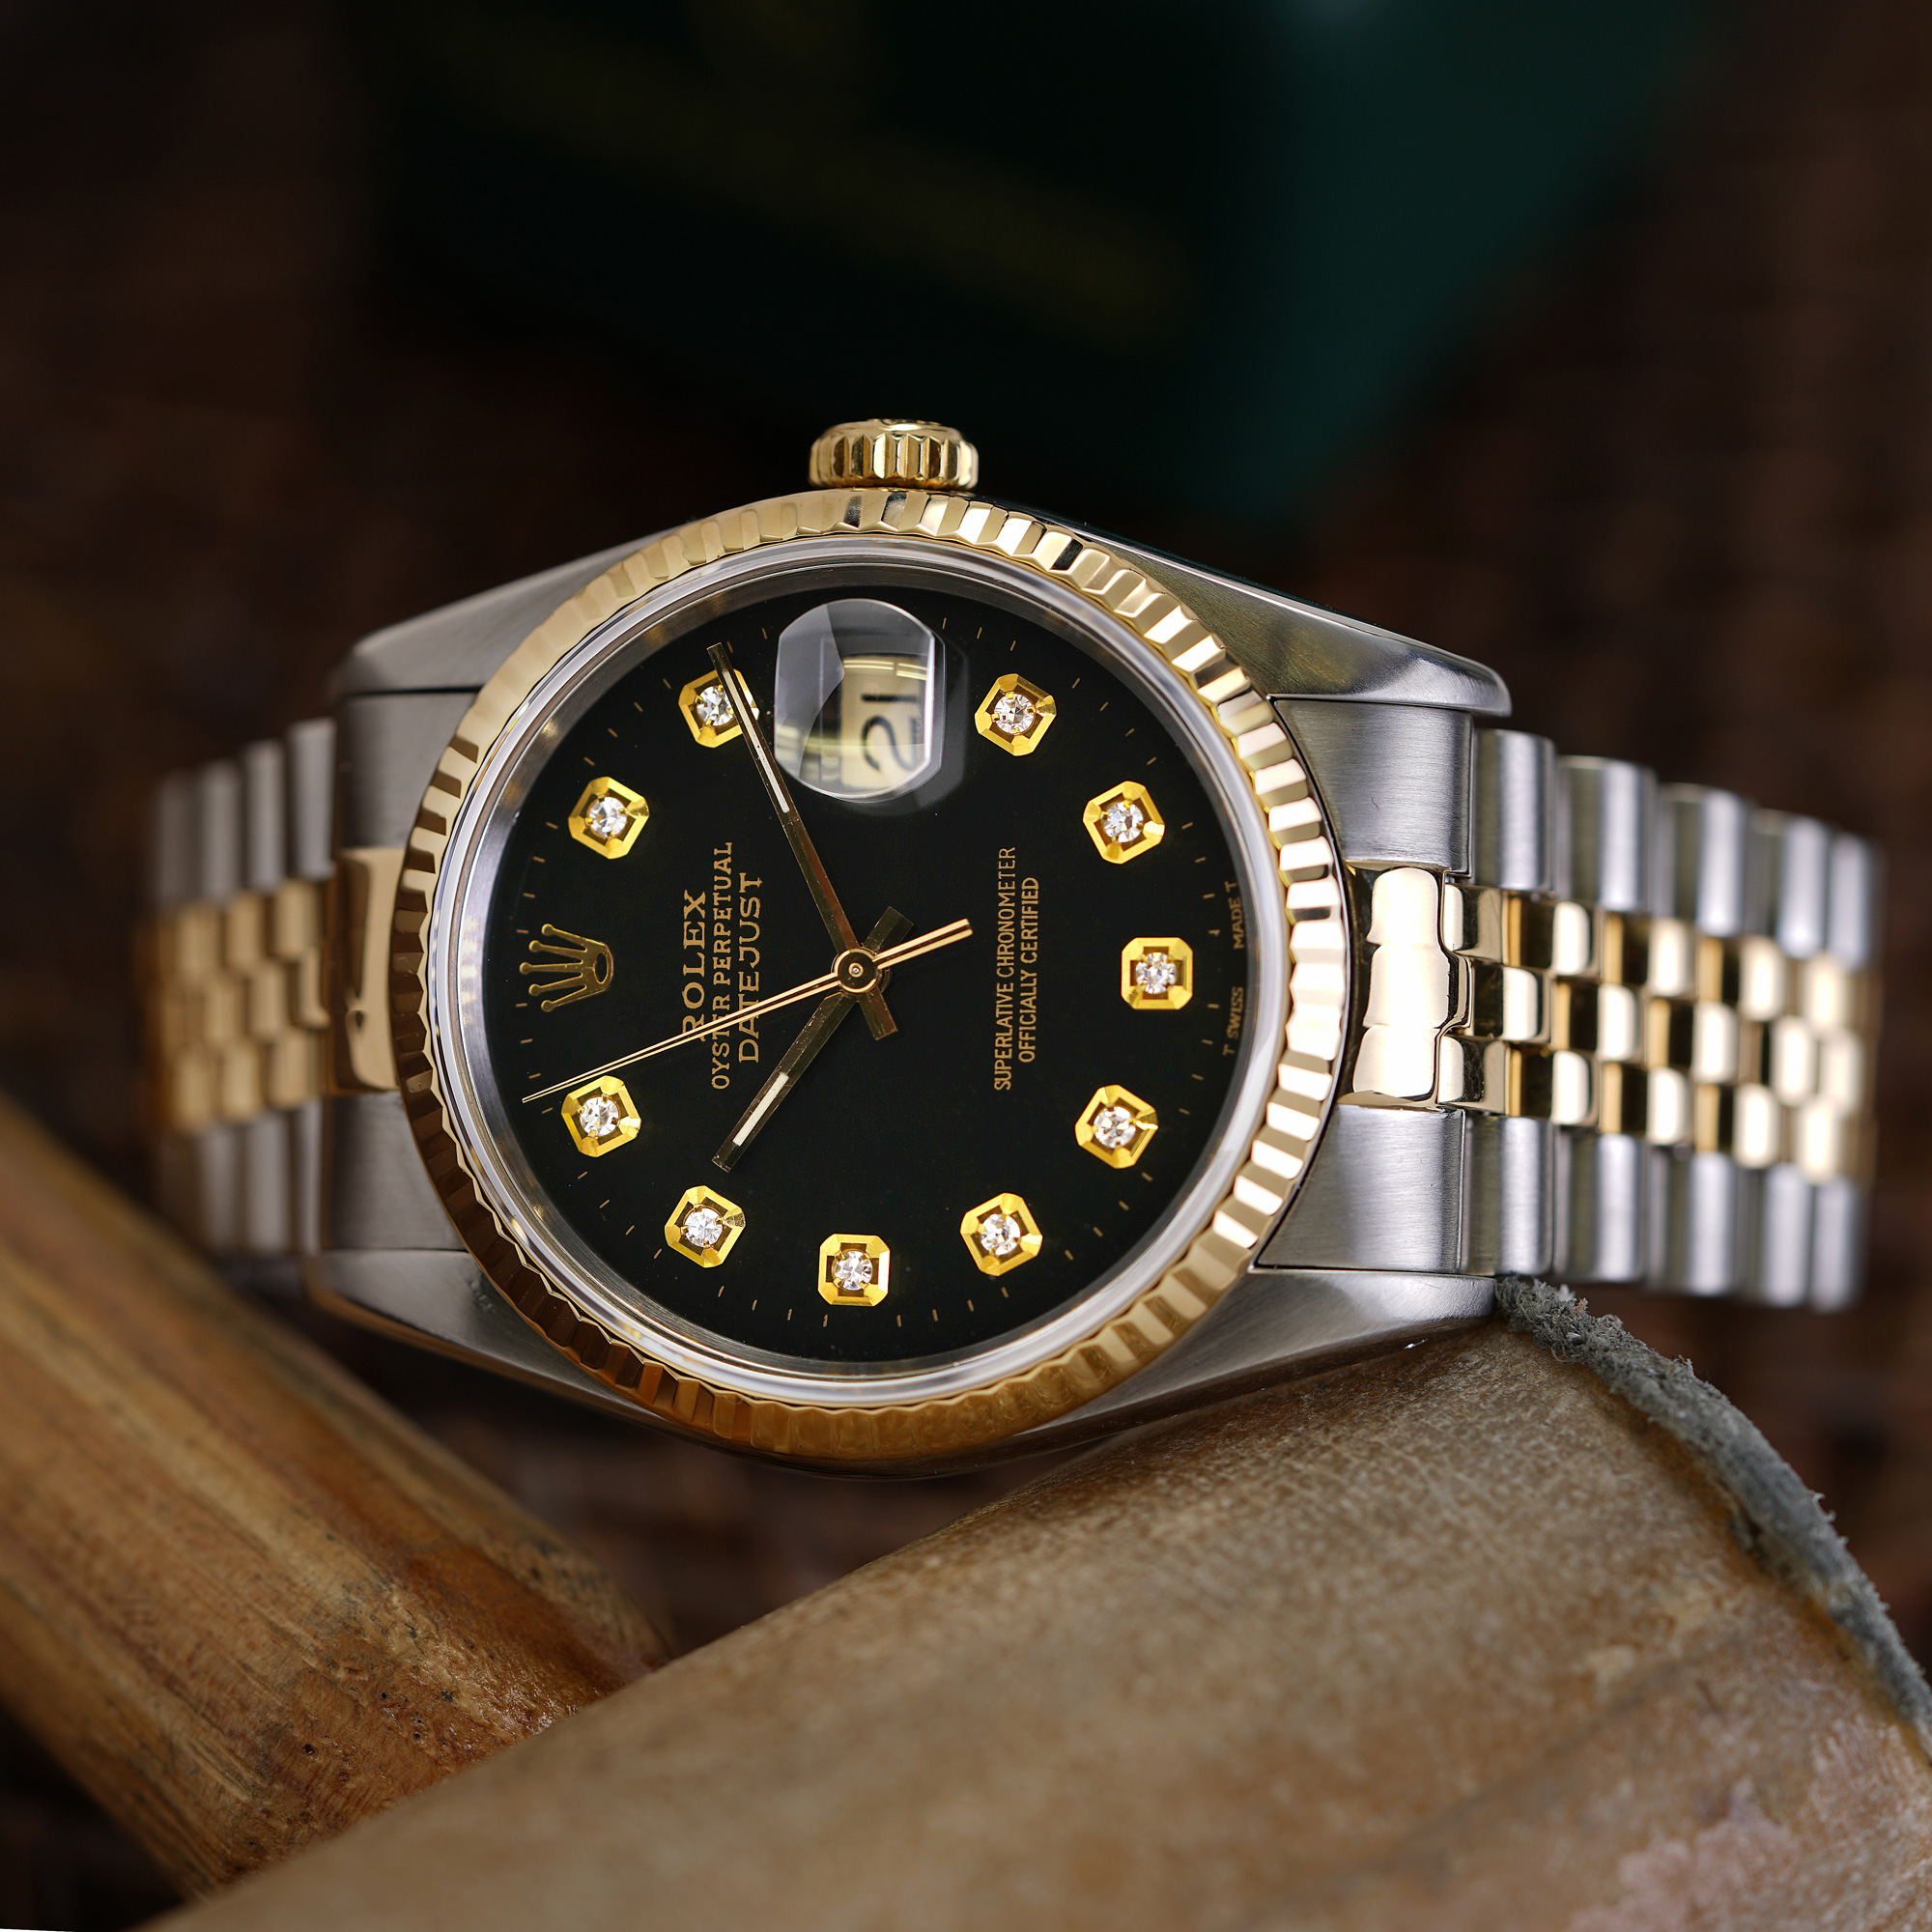 Diamond Gold Rolex Watch For Men 16233, 36Mm